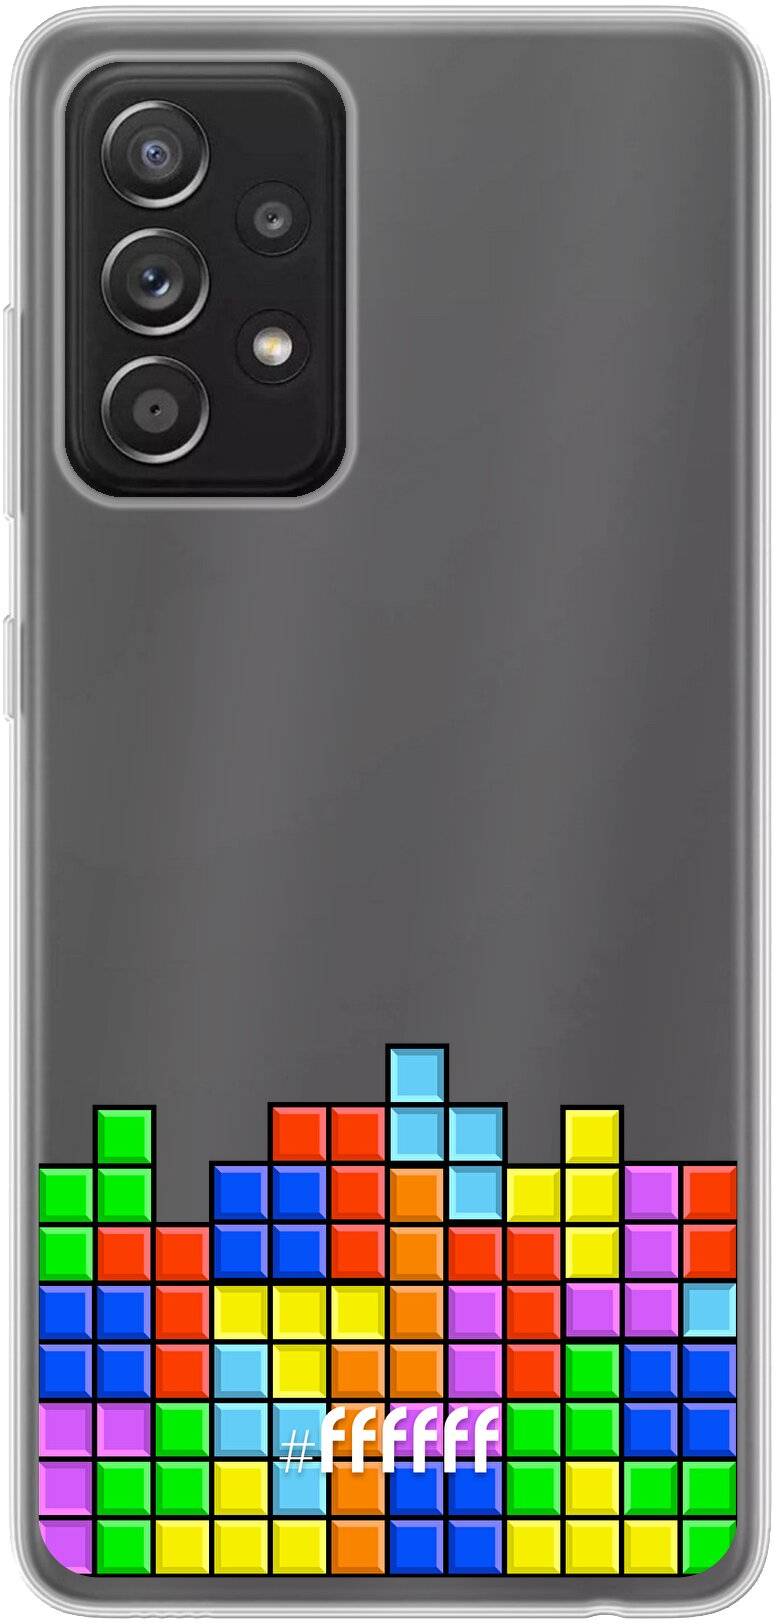 Tetris Galaxy A52